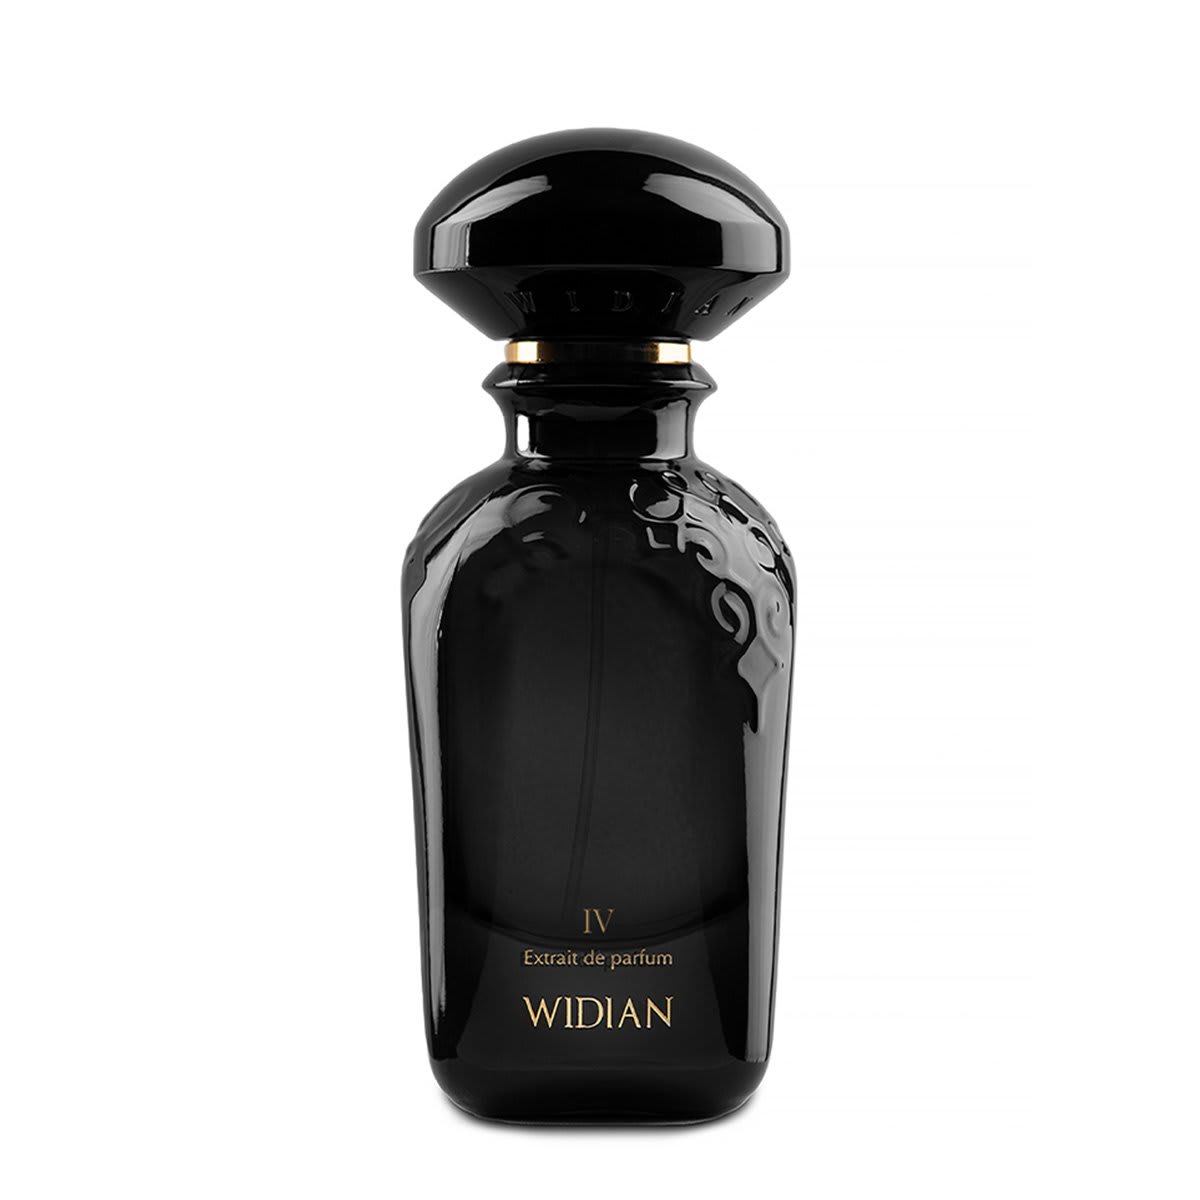 Widian Black IV Parfum